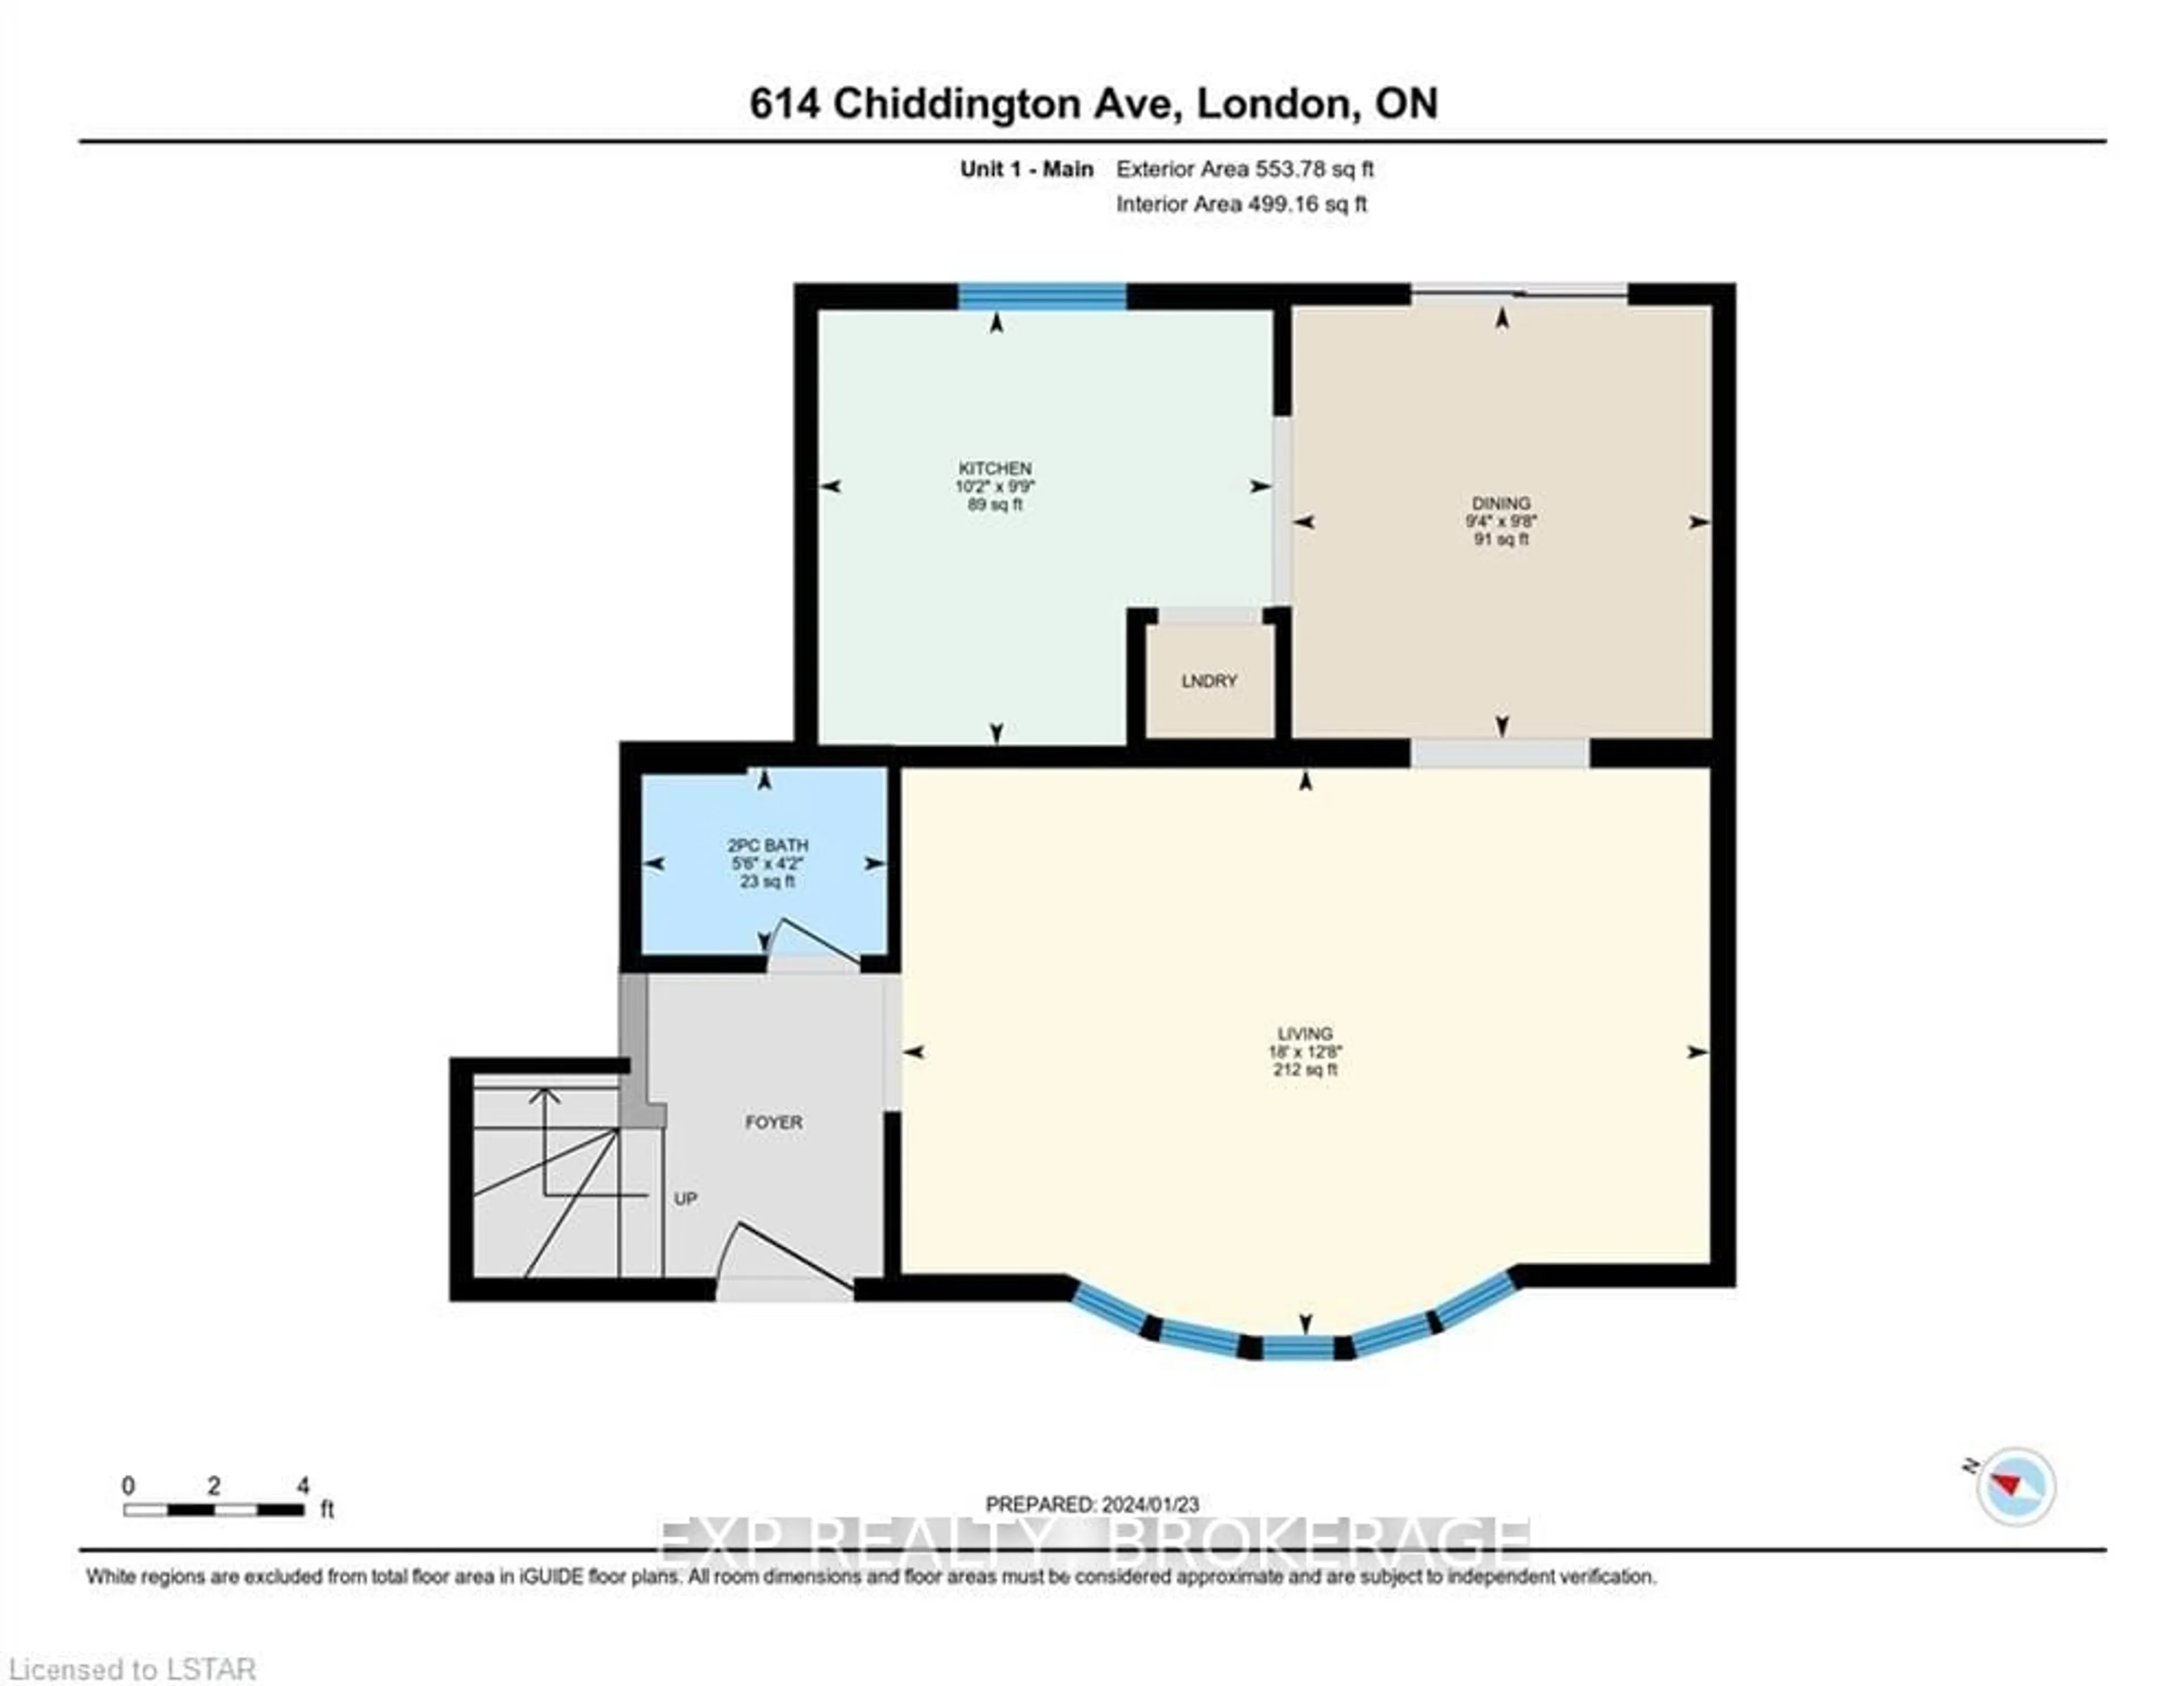 Floor plan for 614 Chiddington Ave, London Ontario N6C 2W5